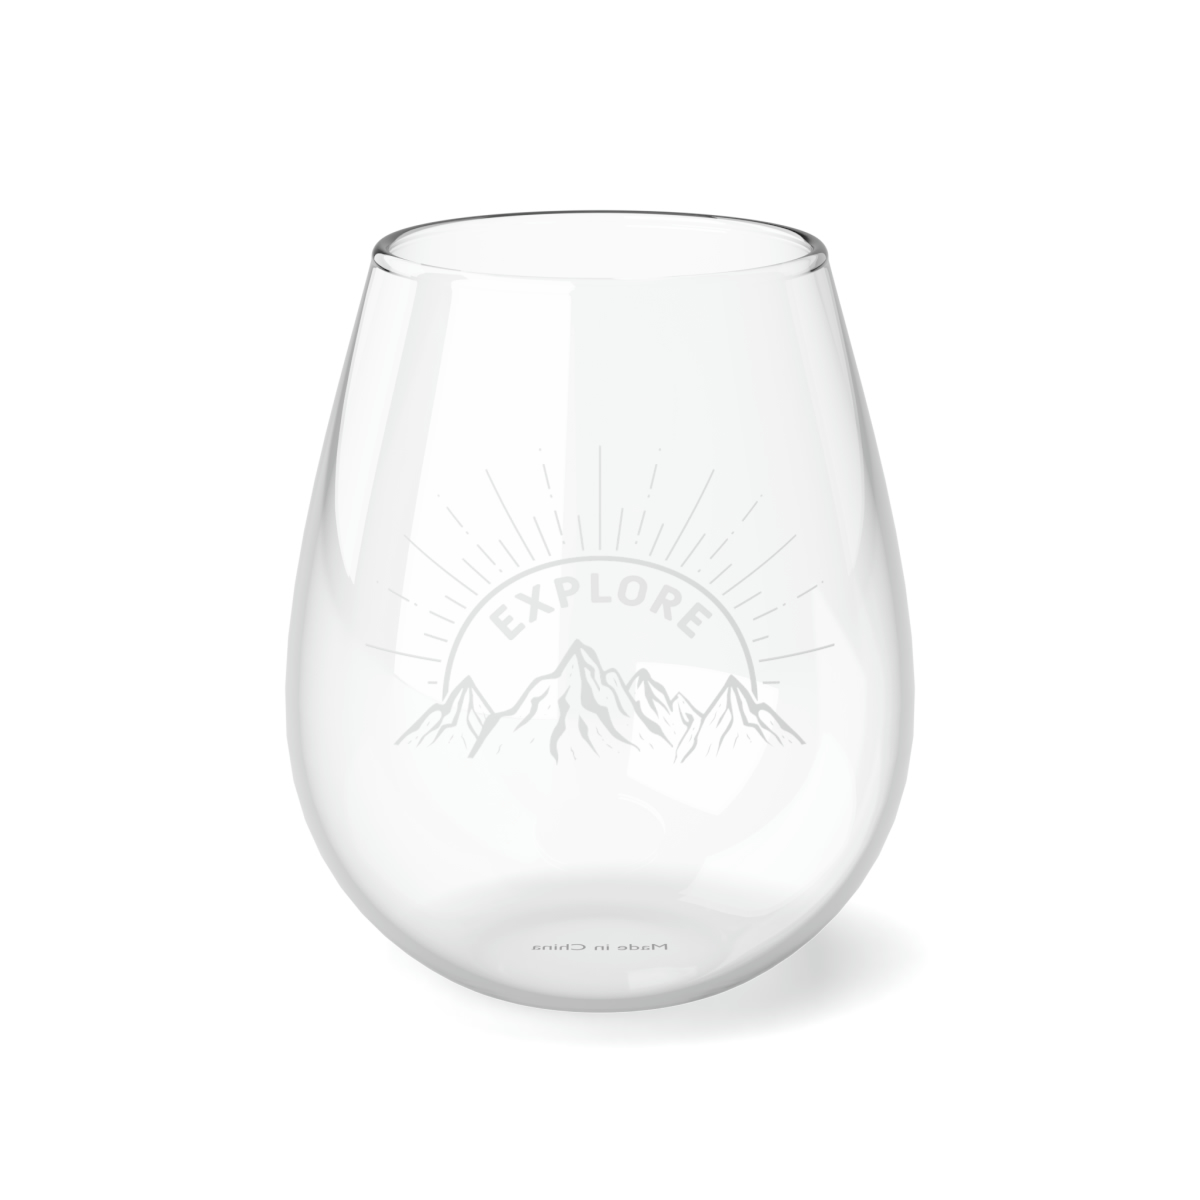 Personalized Stemless Wine Glass: Explore White Mountains Range Design, 11.75oz - $23.69